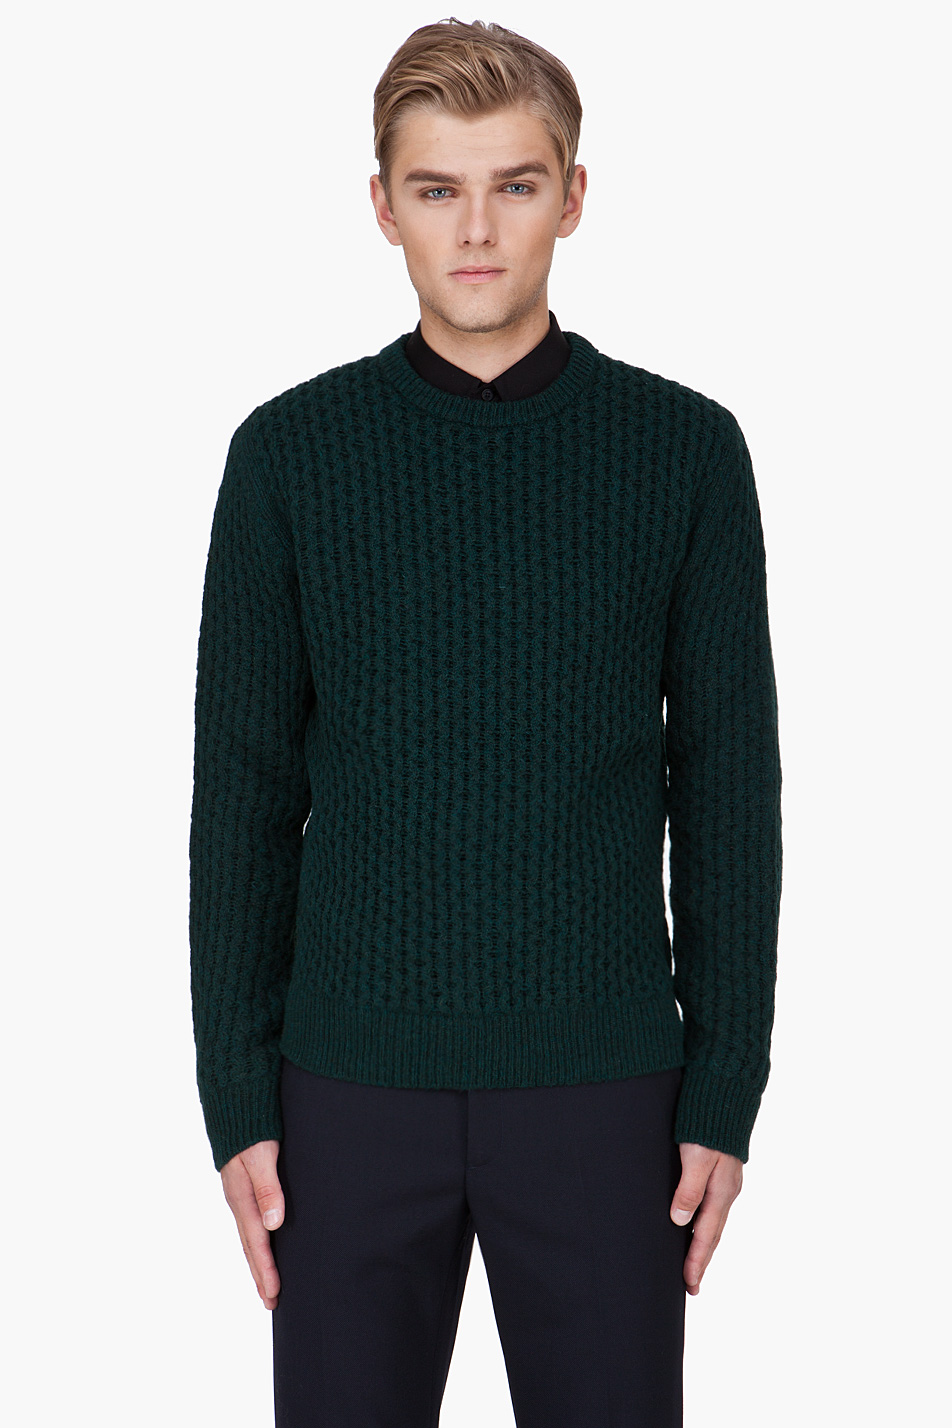 Lyst - Raf simons Dark Green Wool Knit Sweater in Green for Men